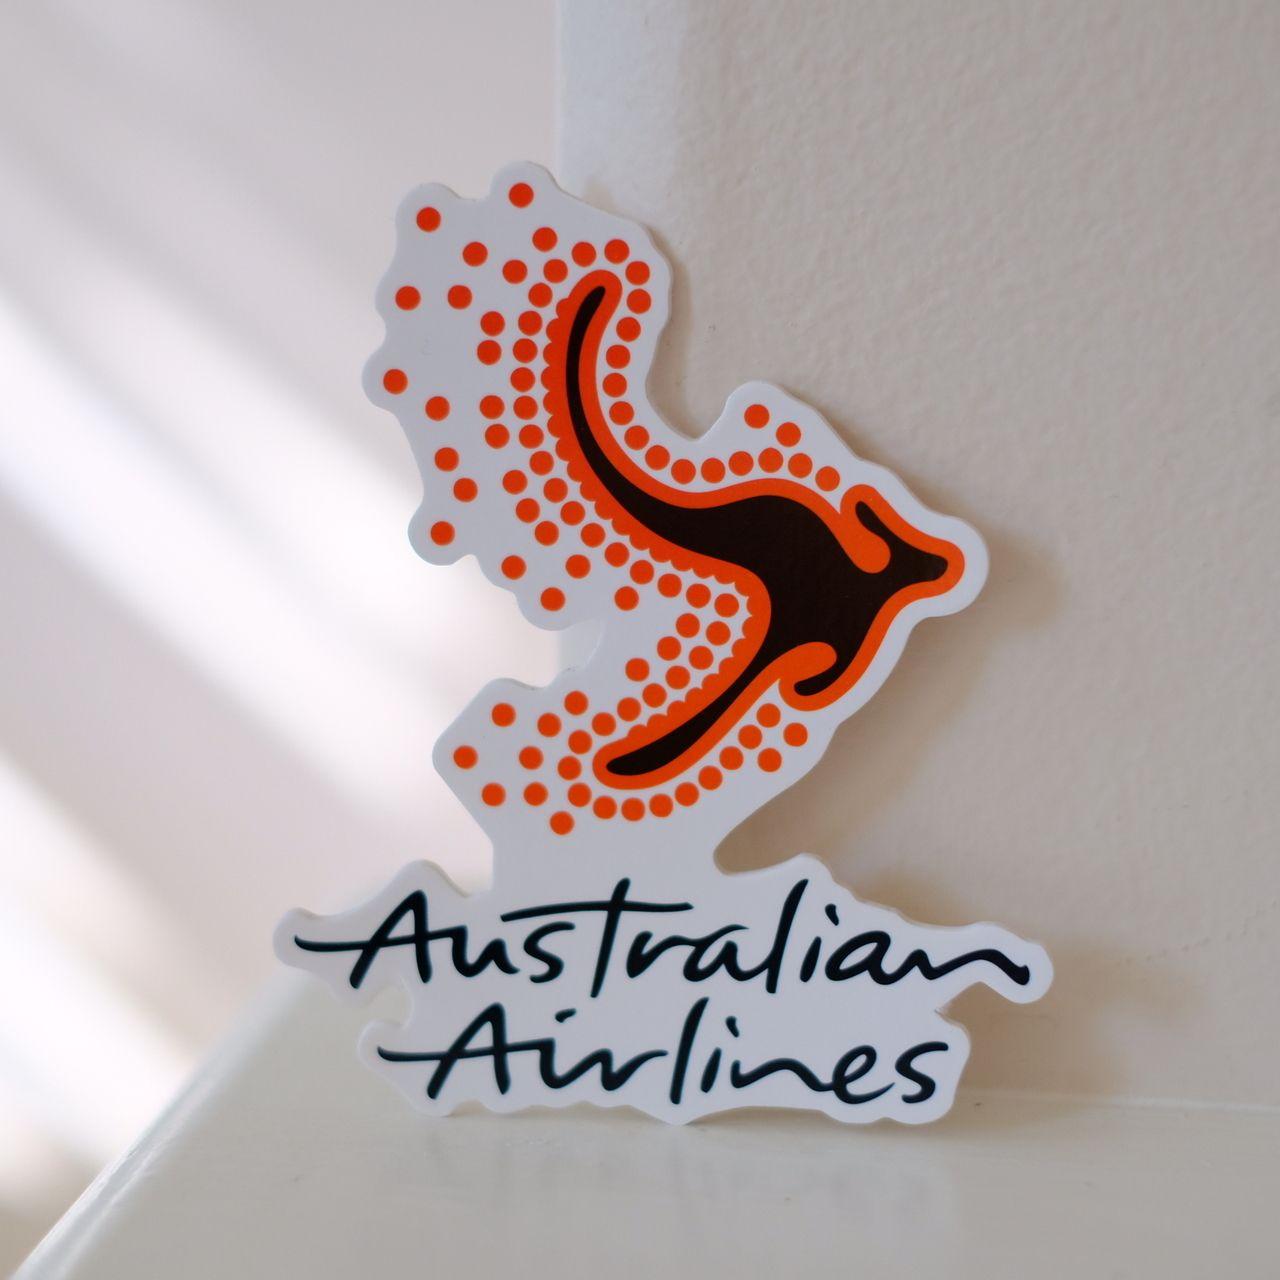 Australian Air Logo - 2914 Australian Airlines logo Air Travel waterproof 3x3.5